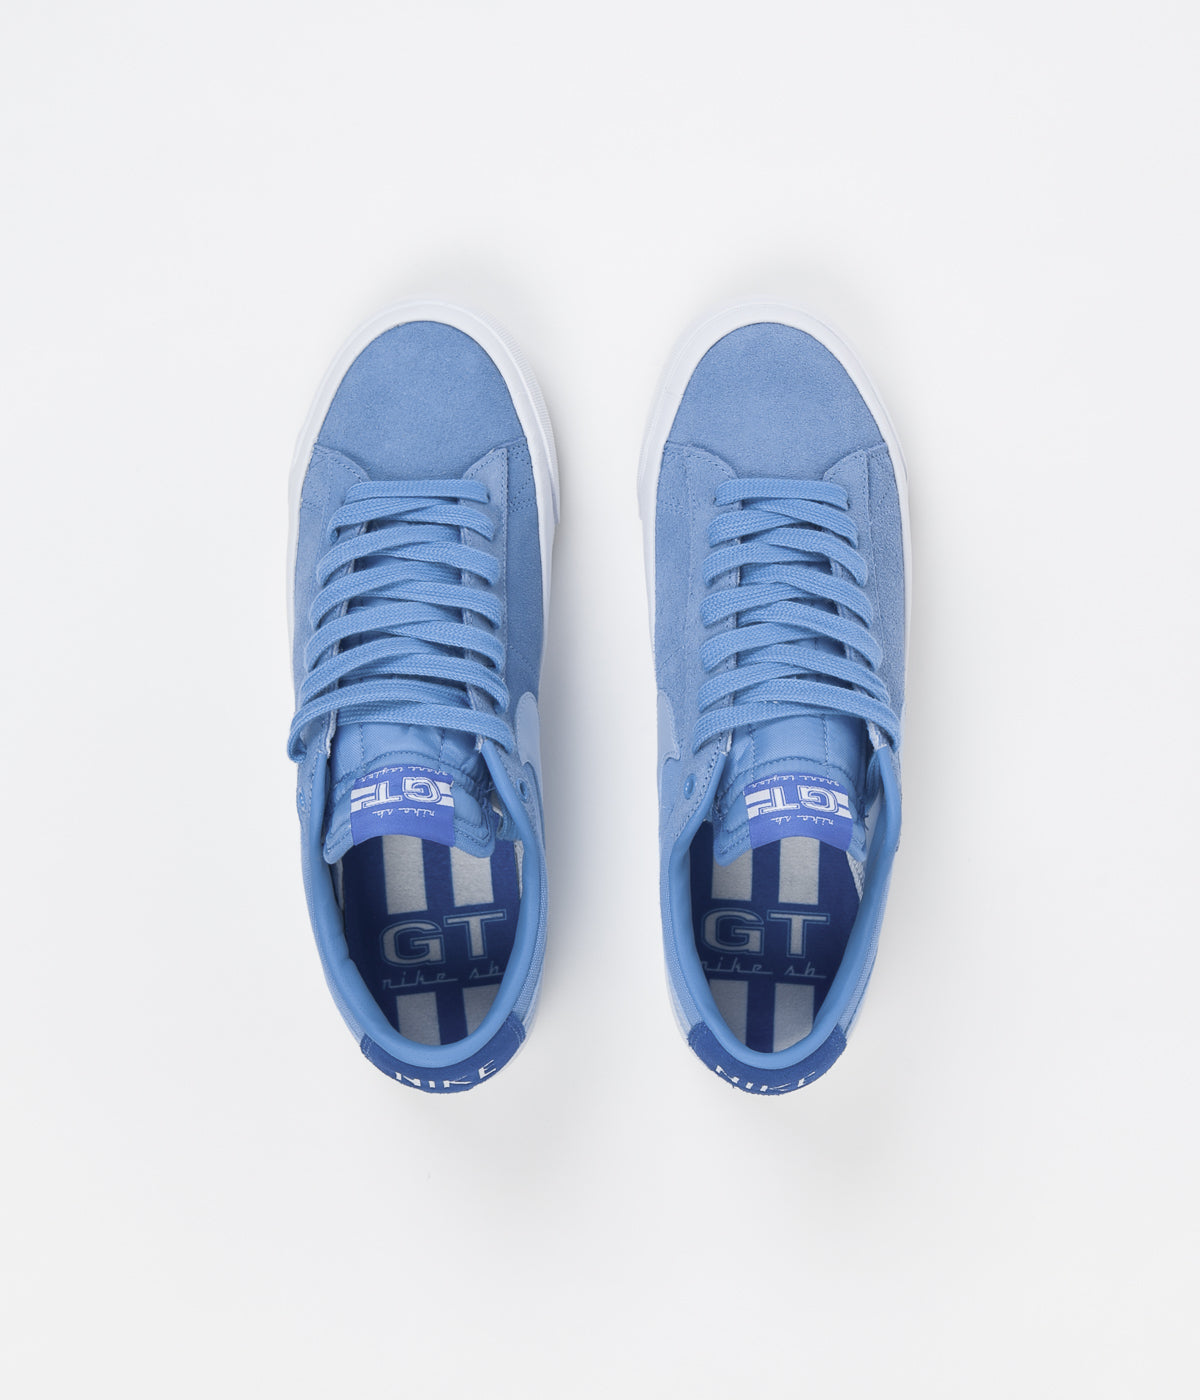 Nike Sb Blazer Low Pro Gt Shoes Coast Psychic Blue Signal Blue Fitforhealth